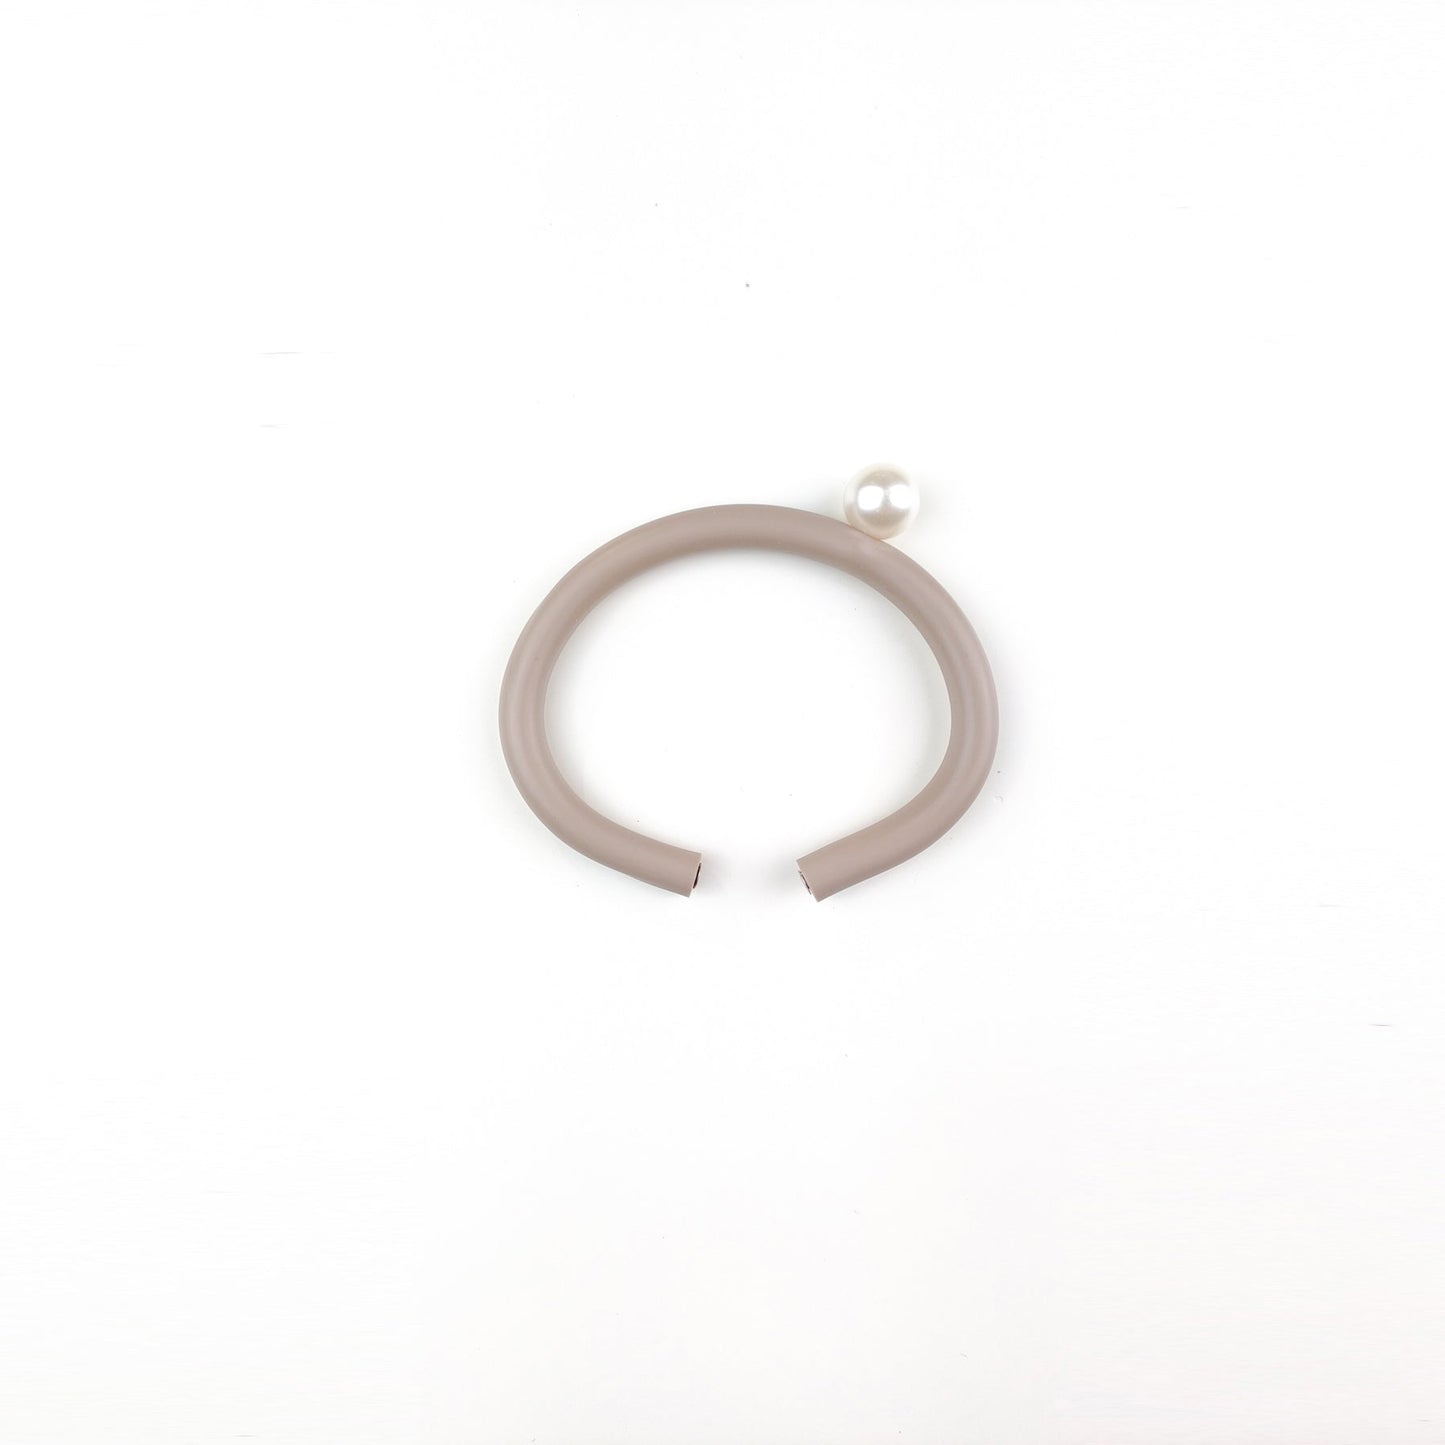 BILICO bracelet - sand color / white pearl